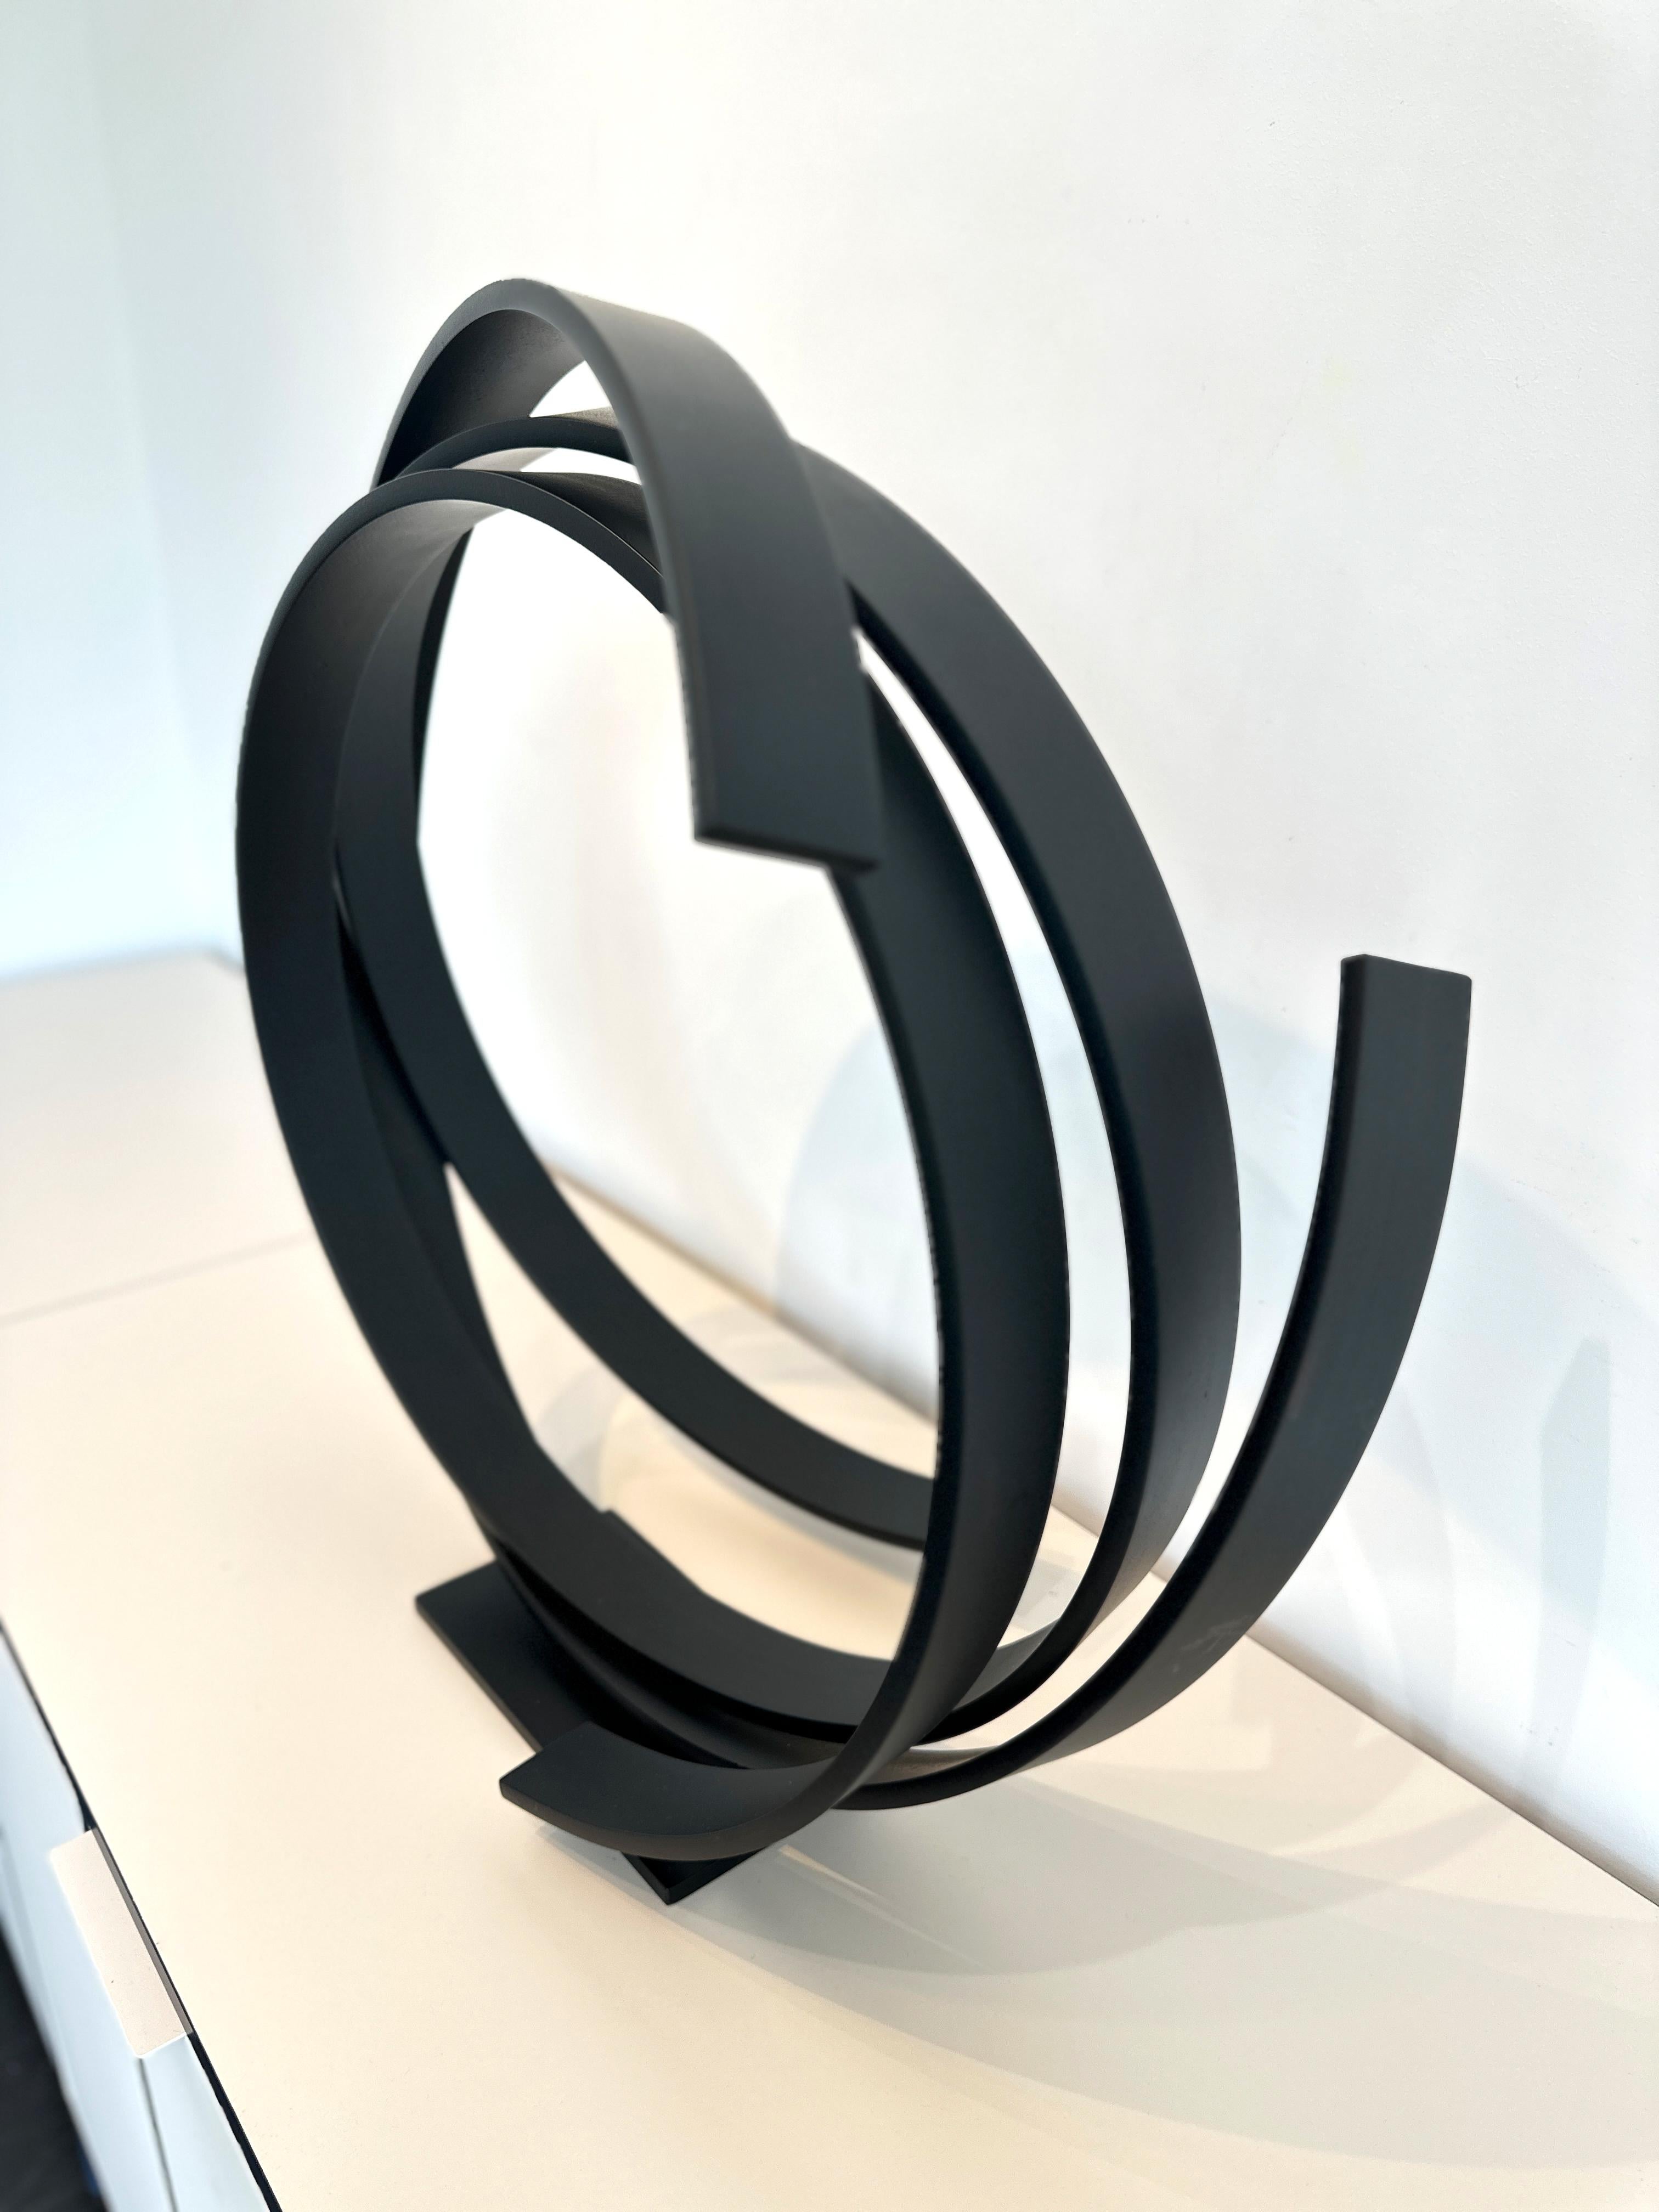 Black Orbit by Kuno Vollet - Large Contemporary Round Orbit sculpture  For Sale 8